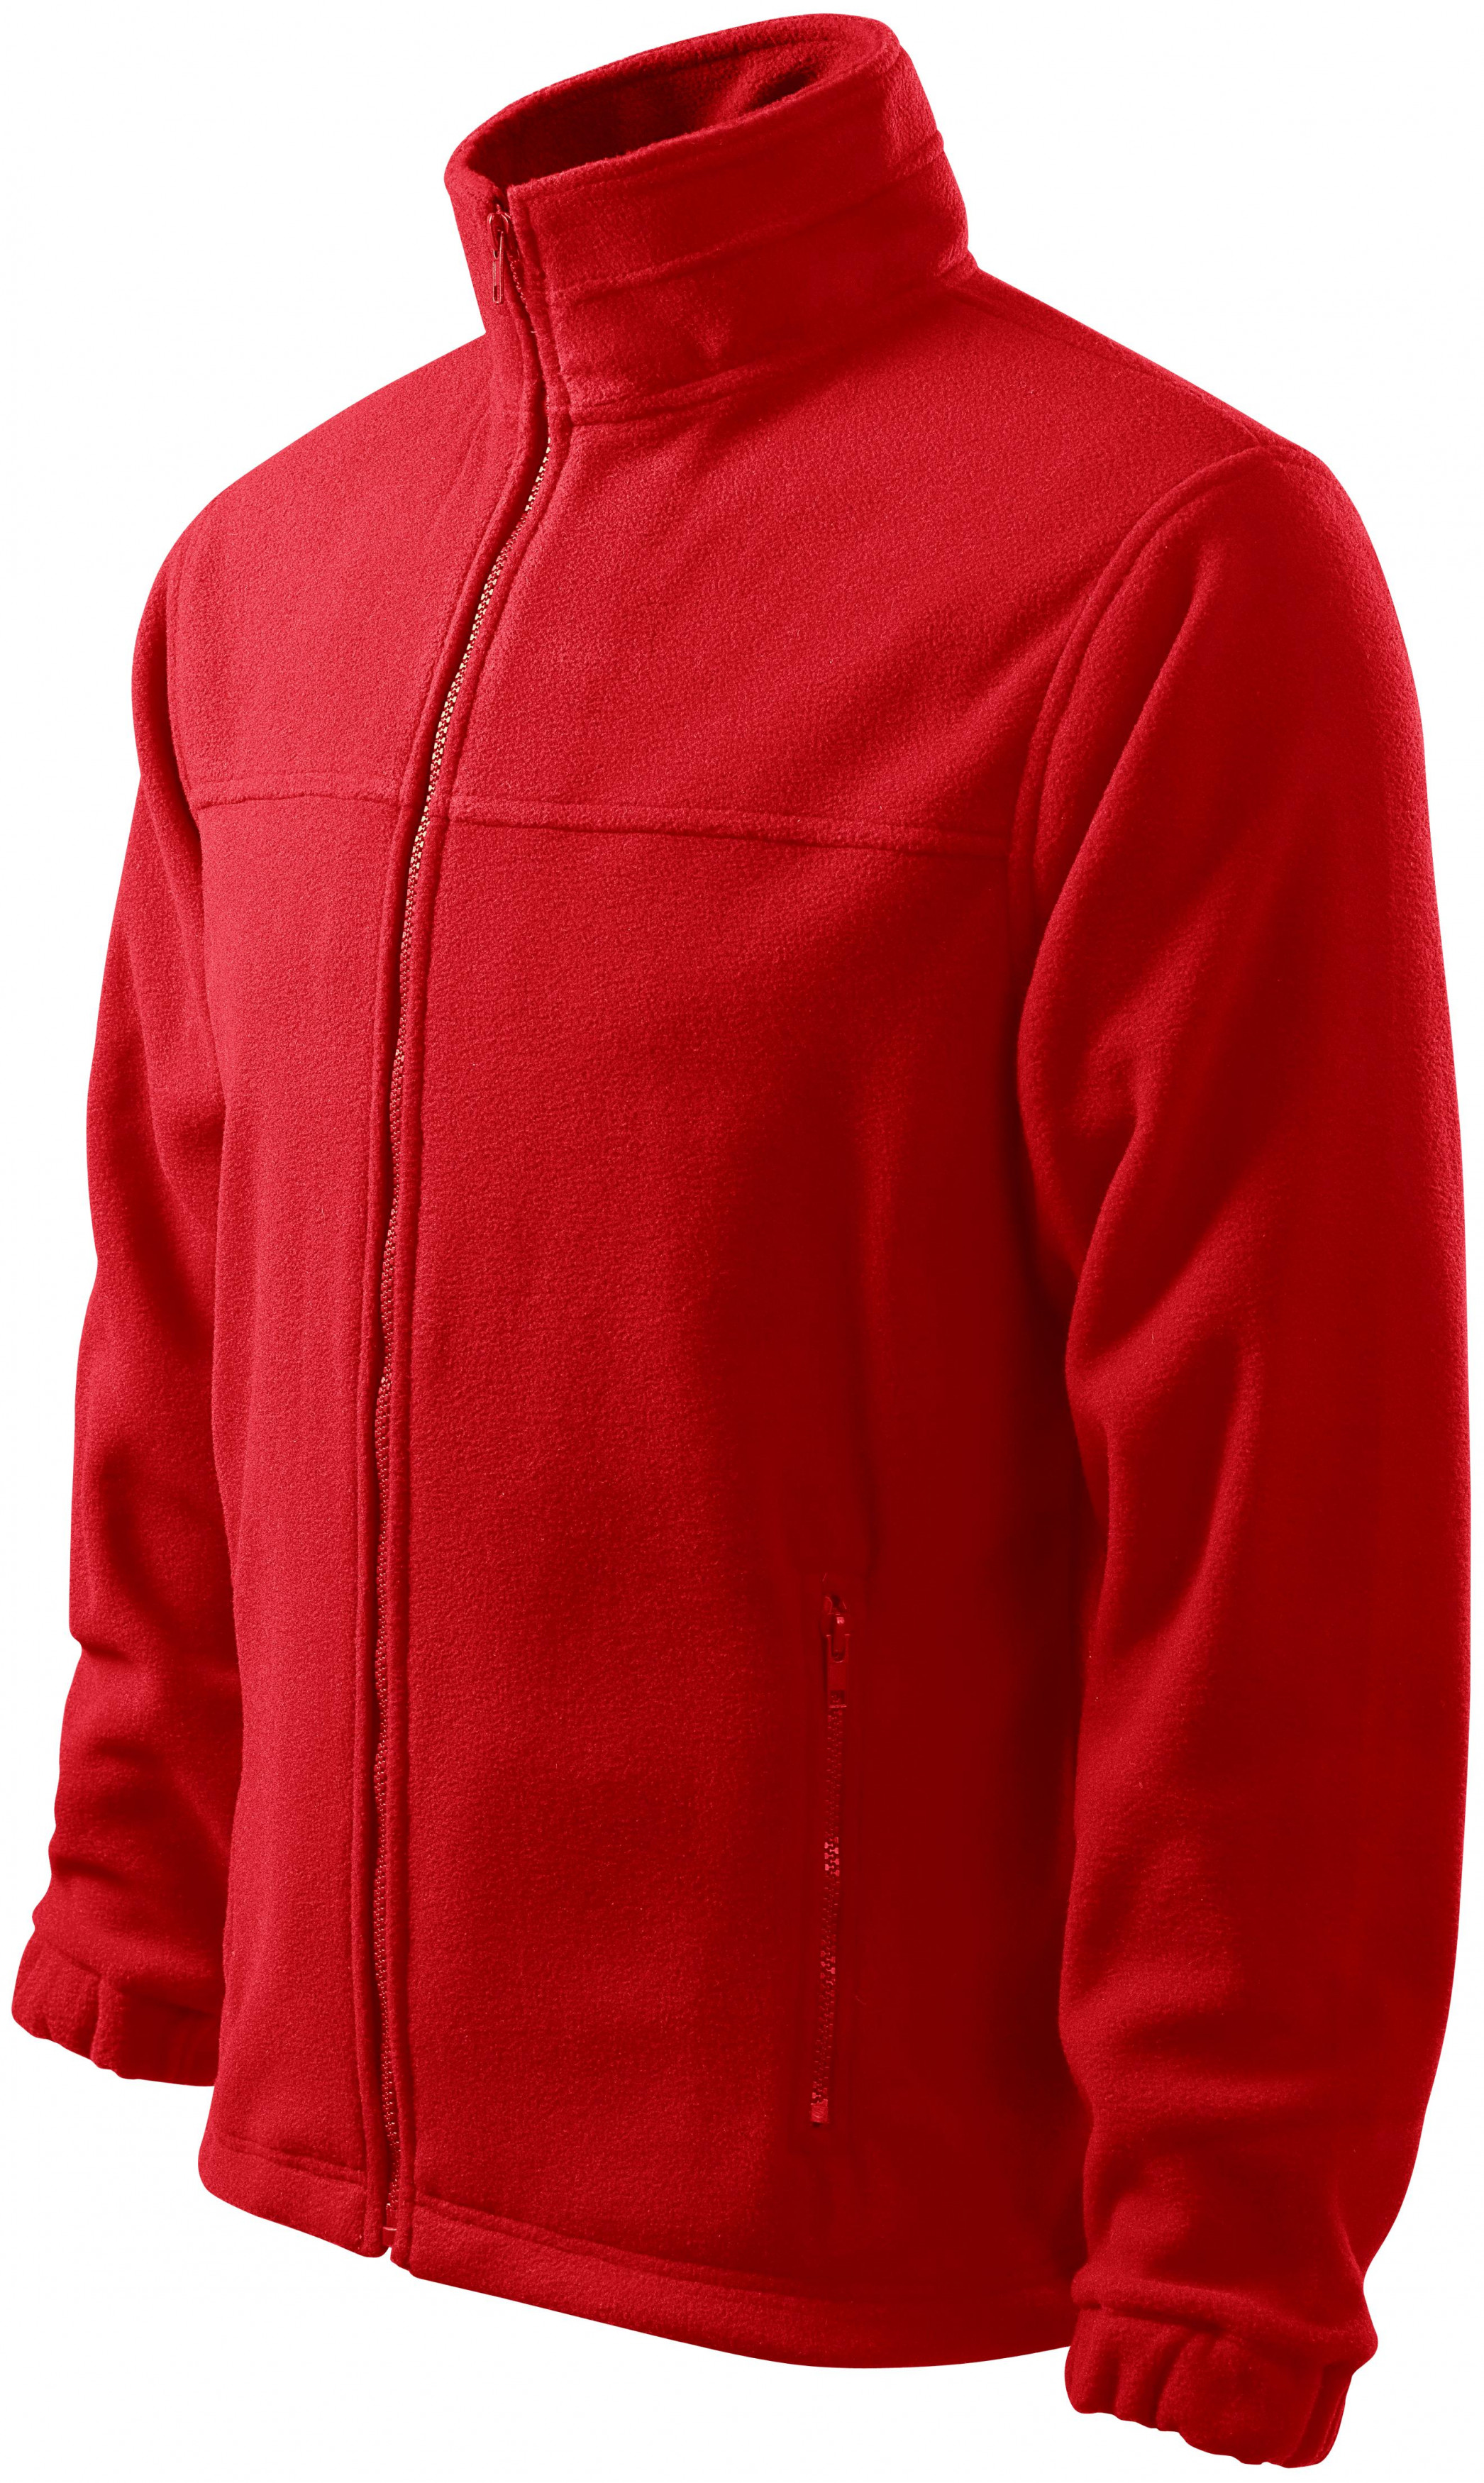 Pánska fleecová bunda, červená, 2XL